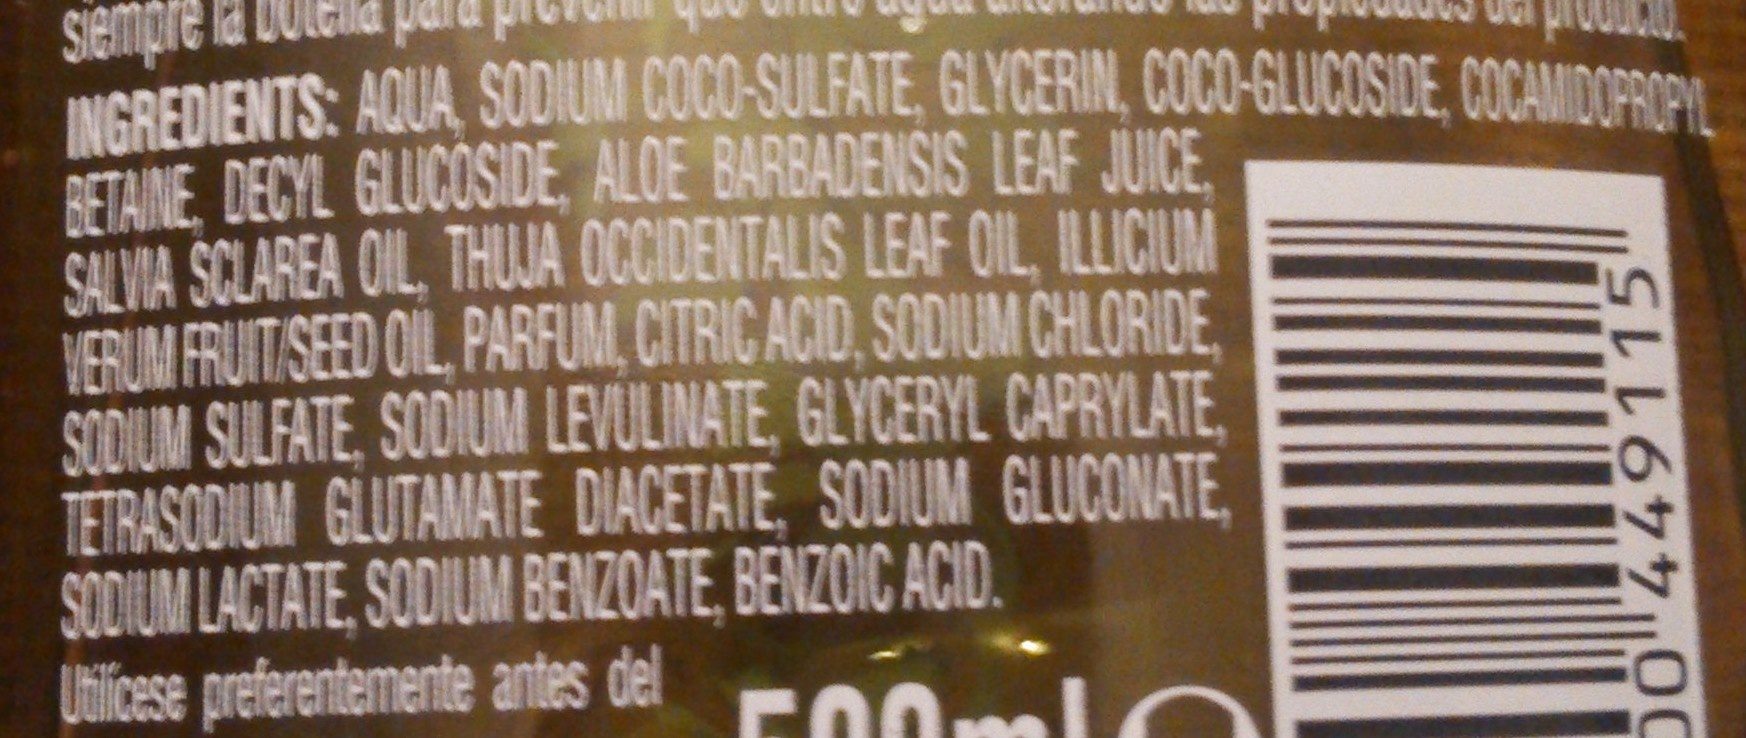 Gel de Baño Natural - Ingredients - es